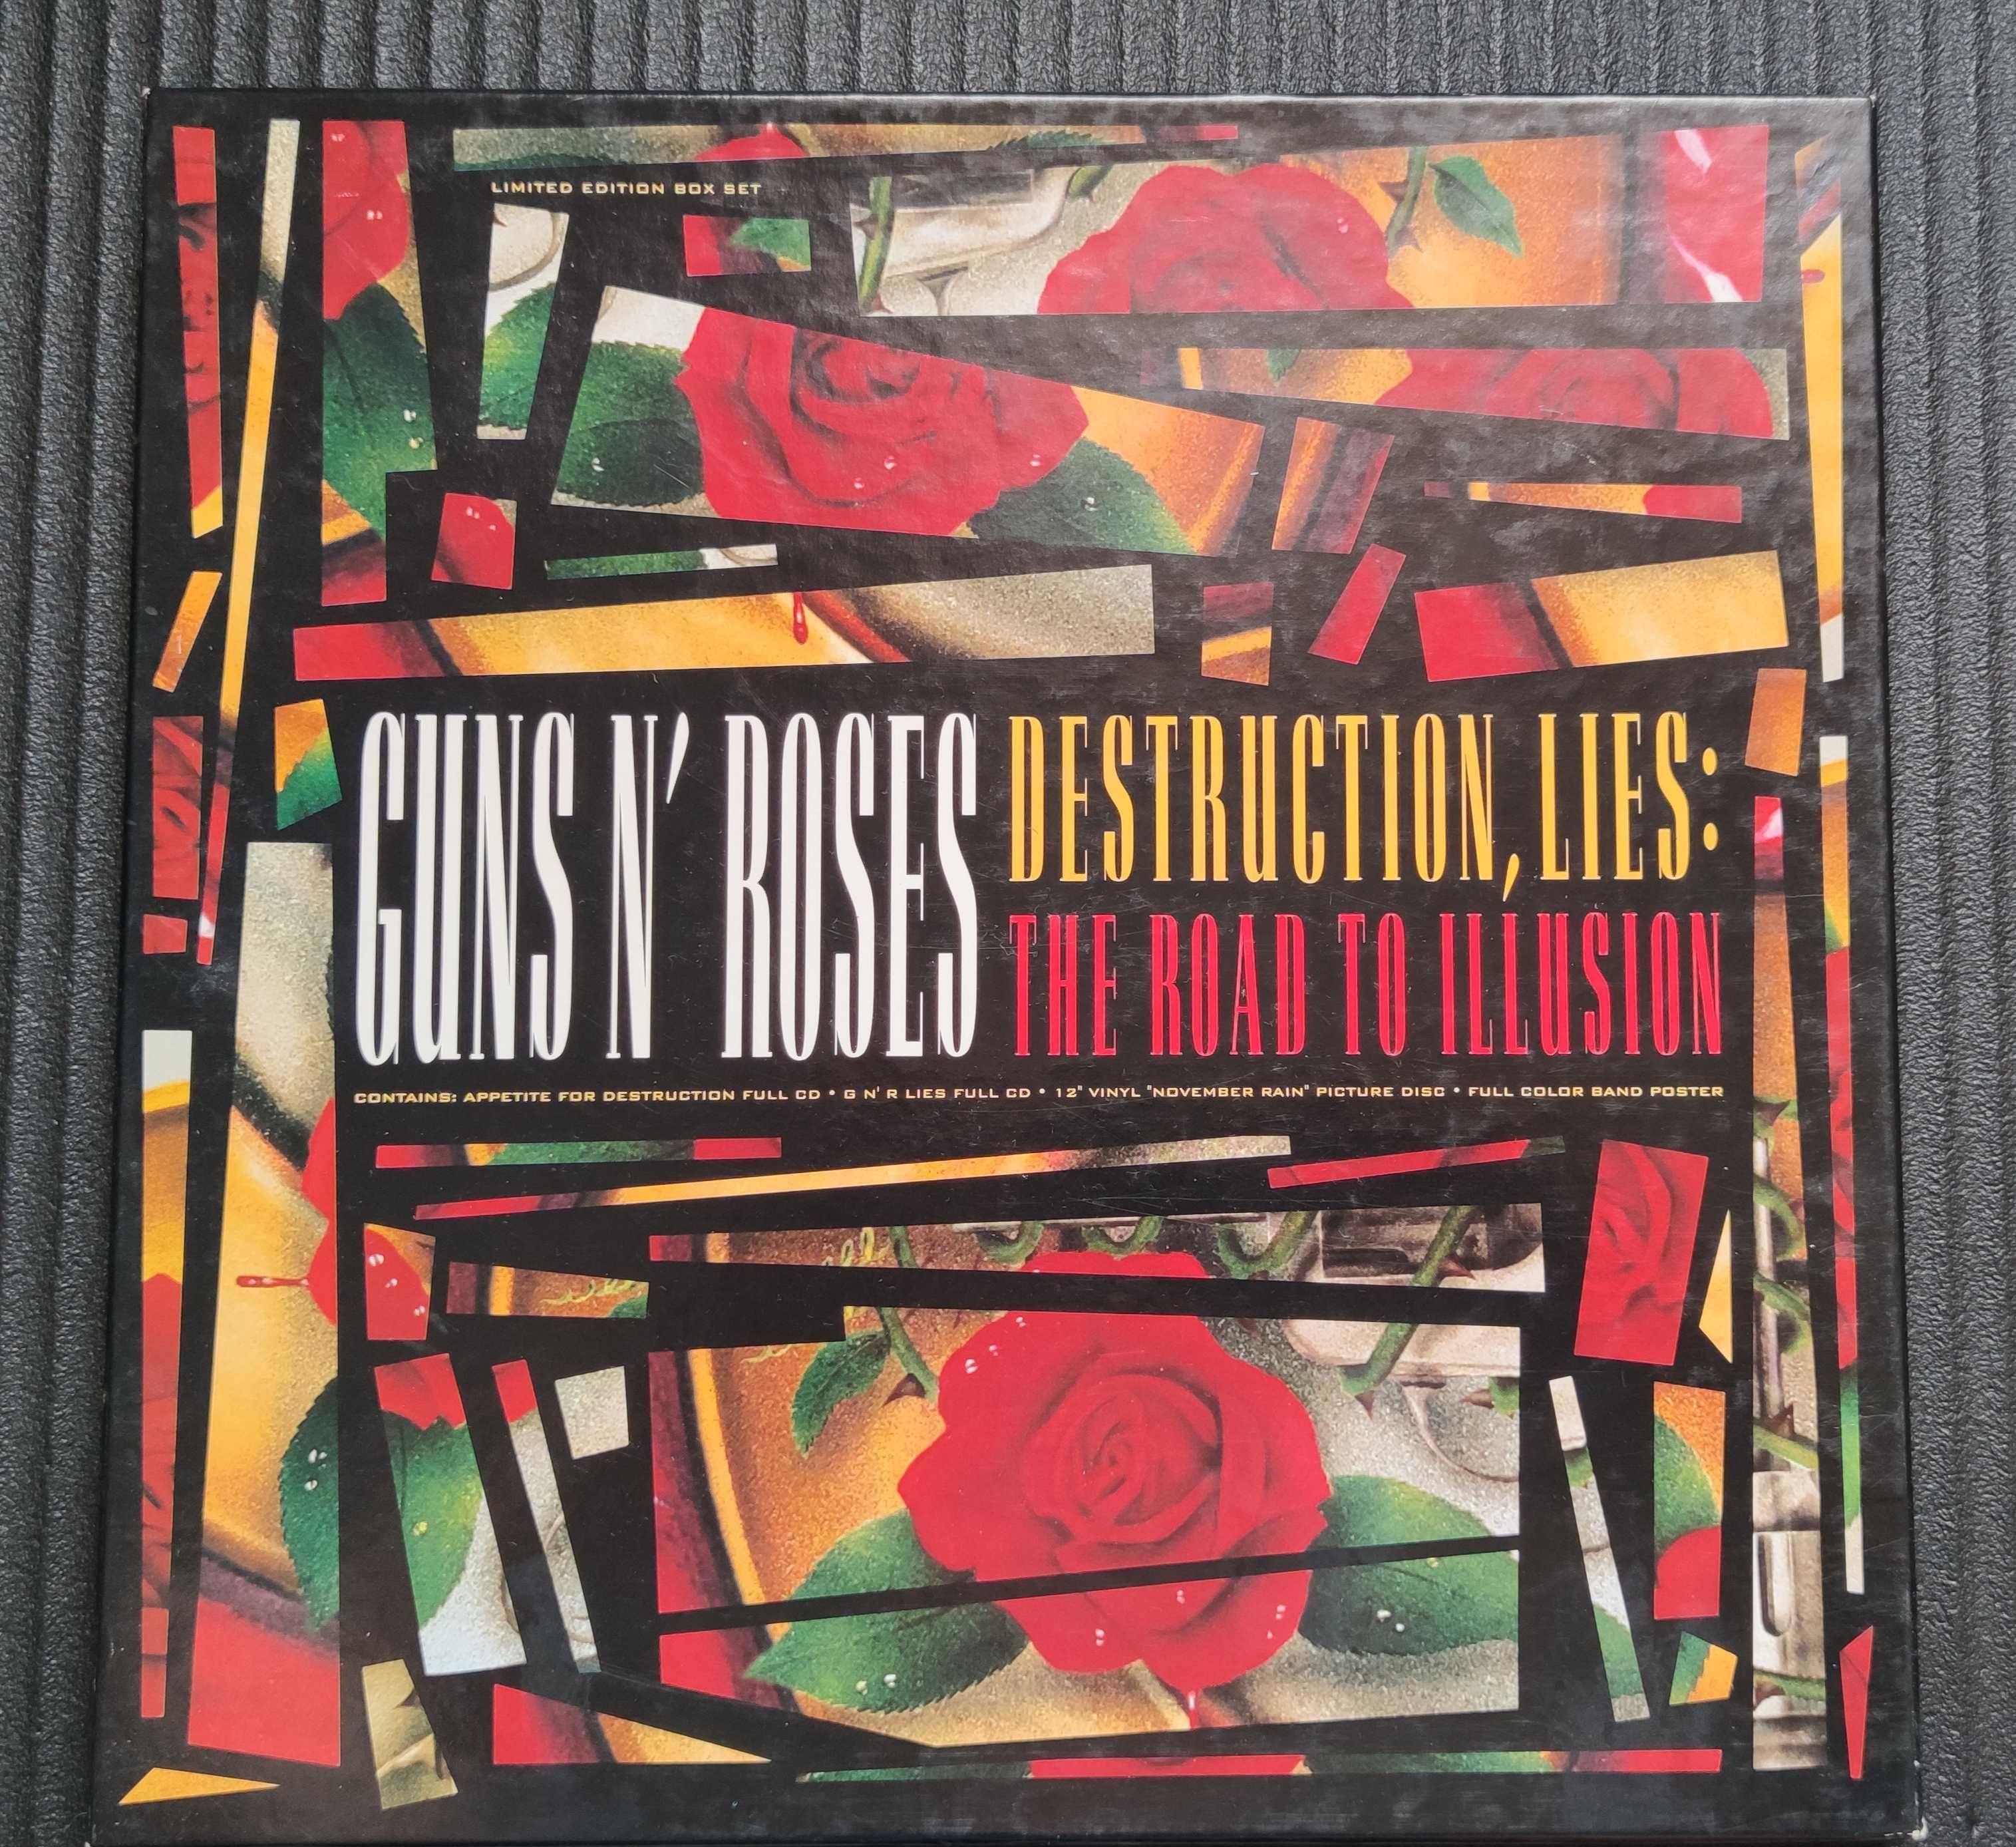 LP + 2CD - Guns N' Roses - Destruction Lies - Road to Illusion -